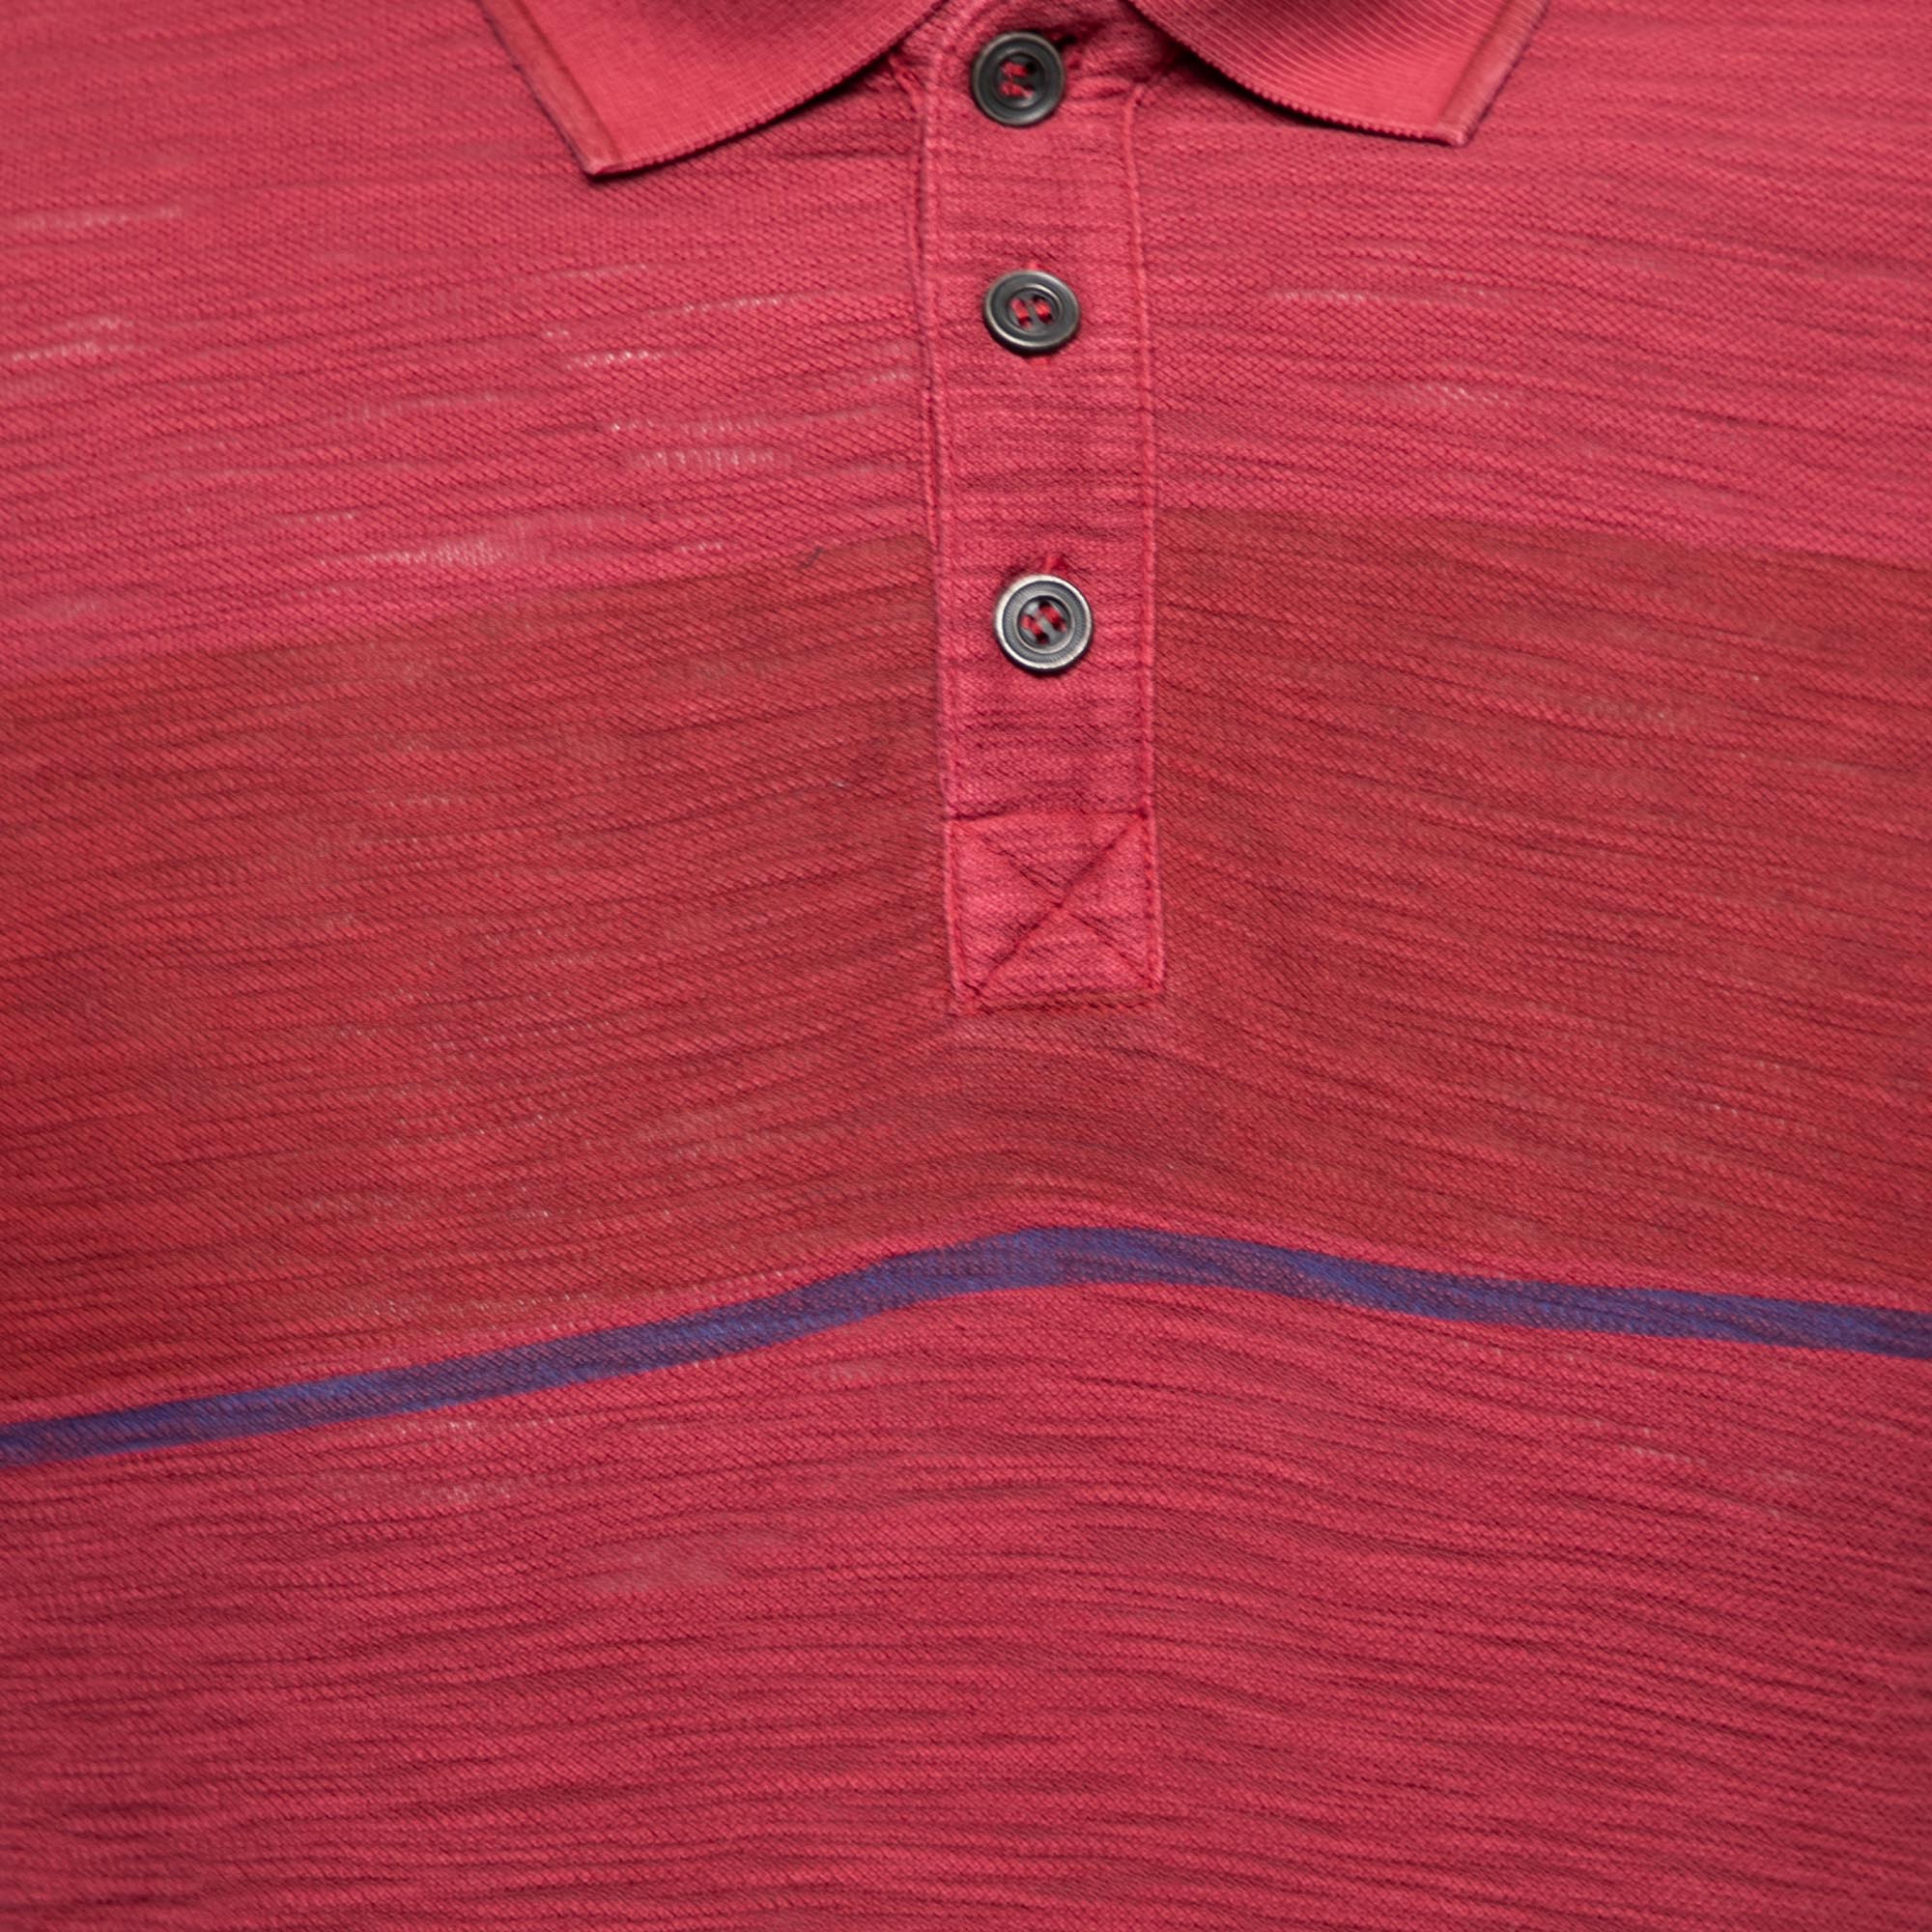 Boss Orange By Hugo Boss Red Textured Cotton Short Sleeve Polo T-Shirt M